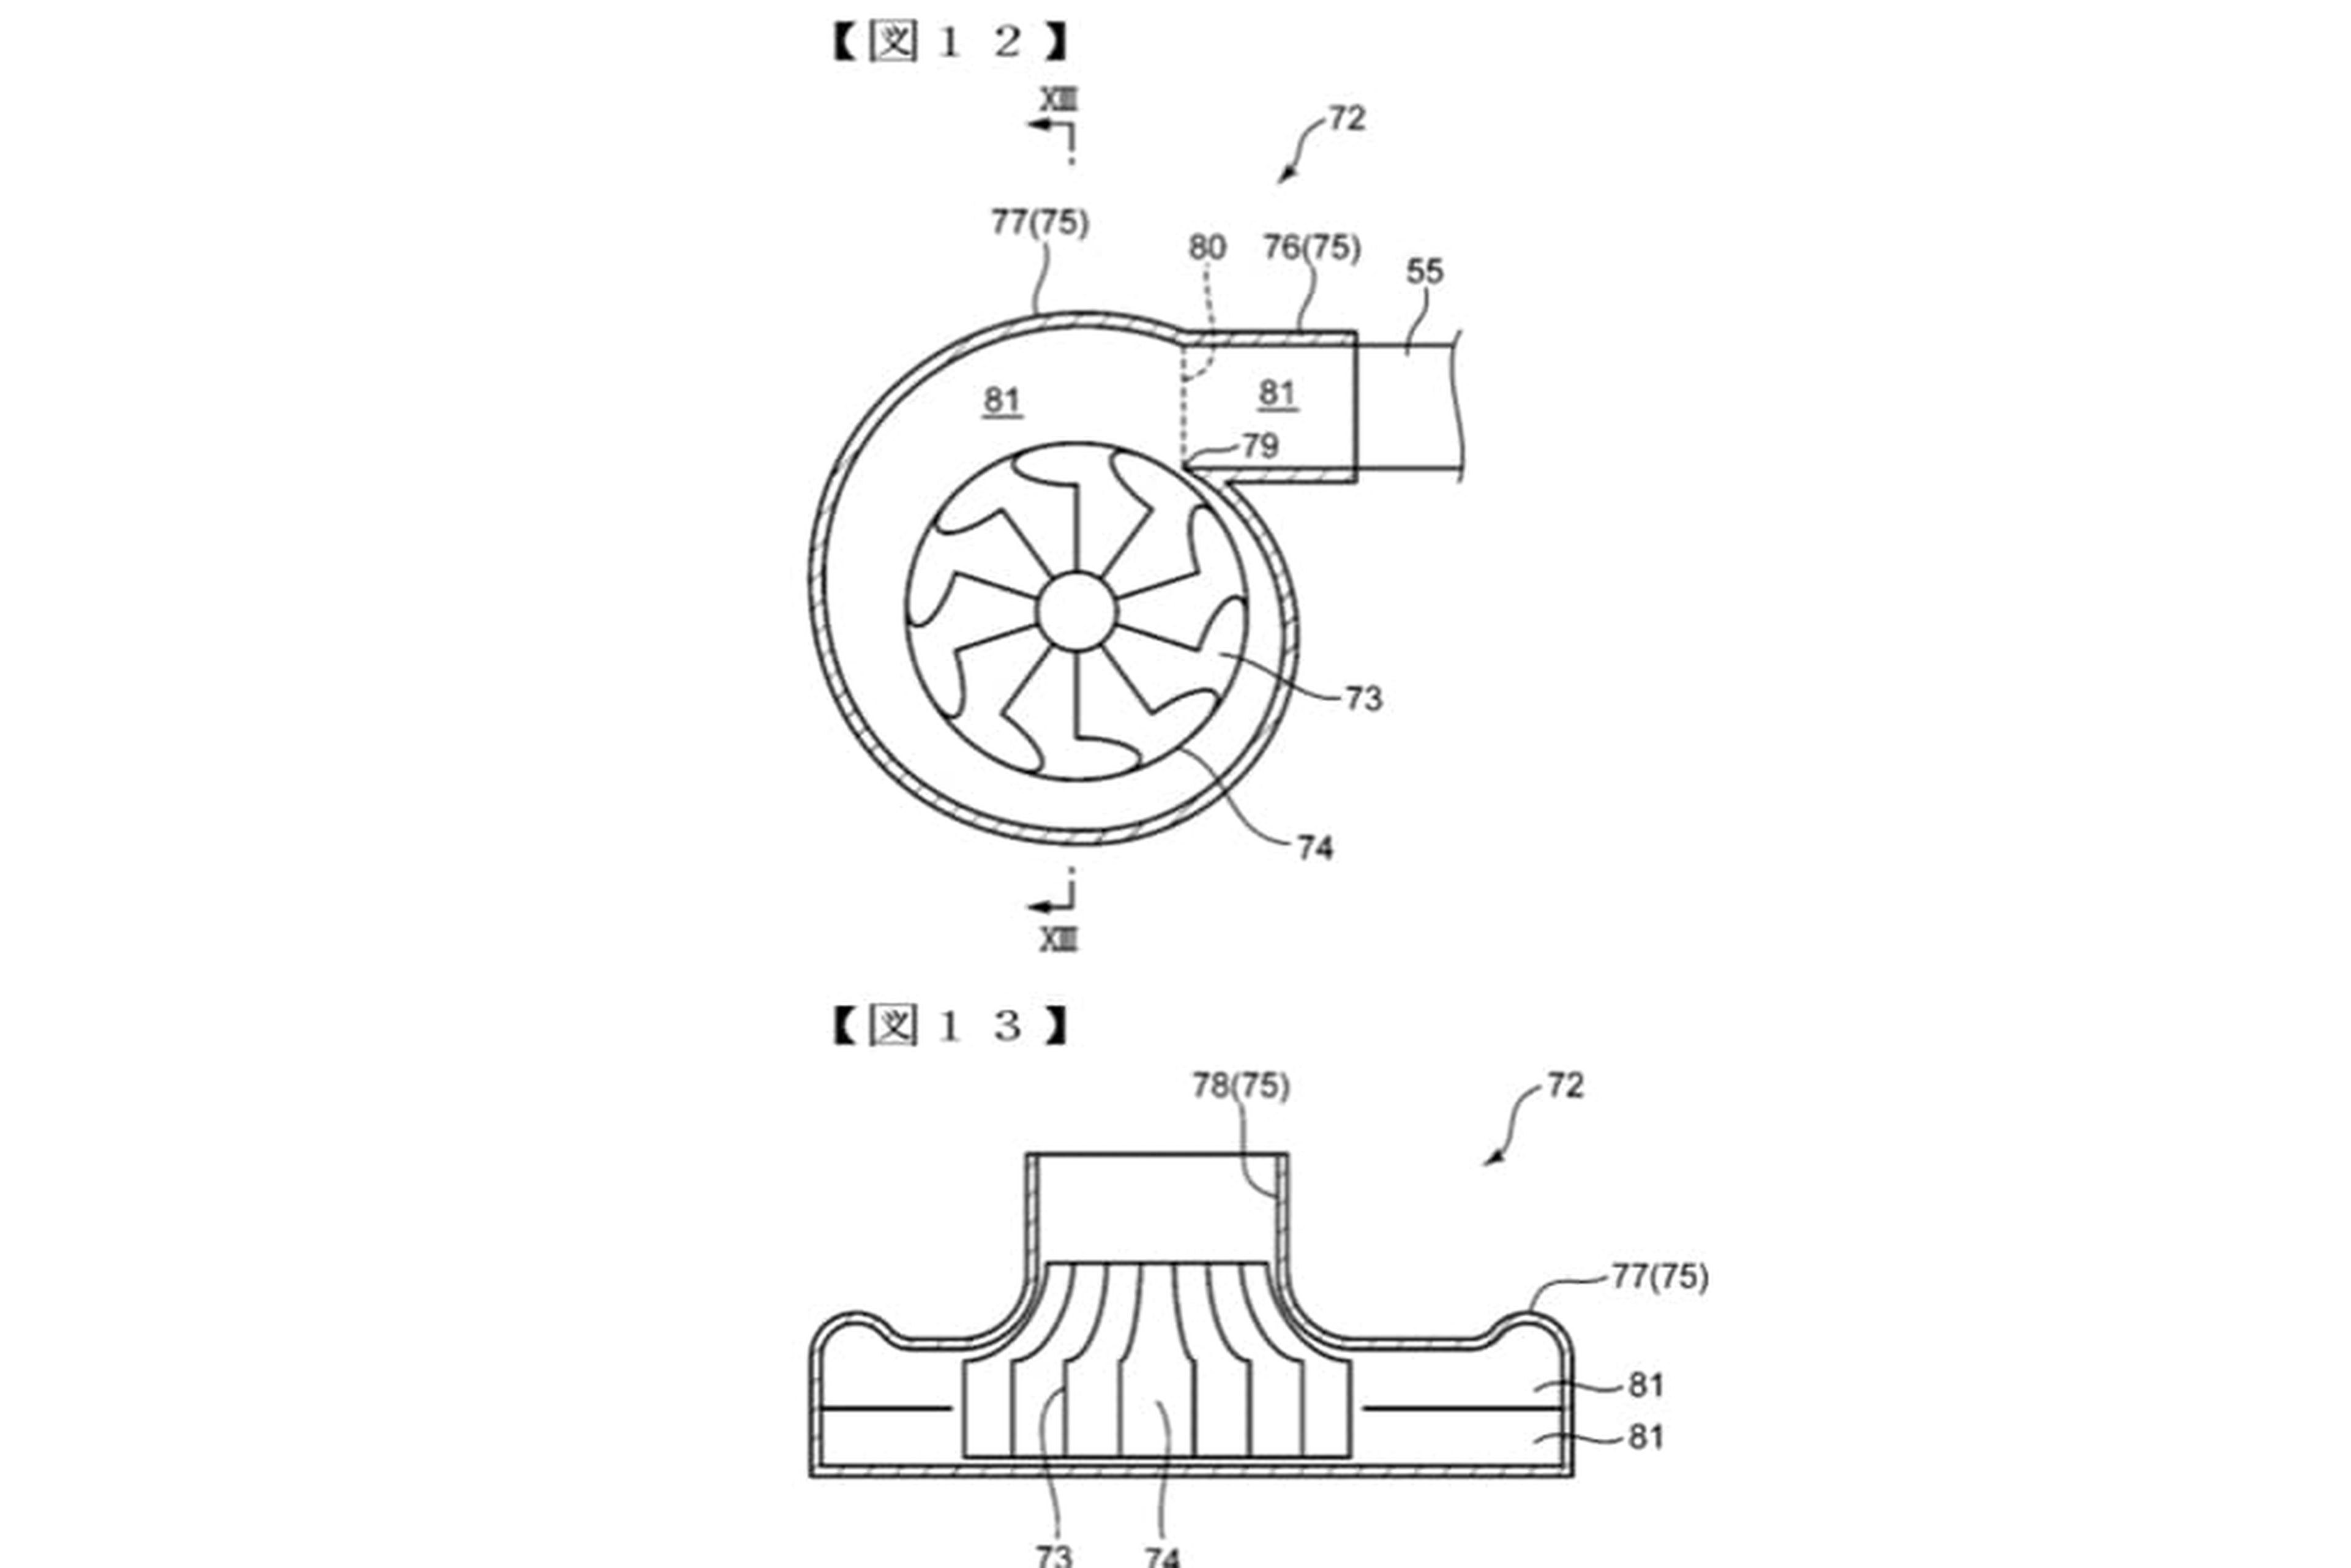 Patente Mazda motor rotativo turbo